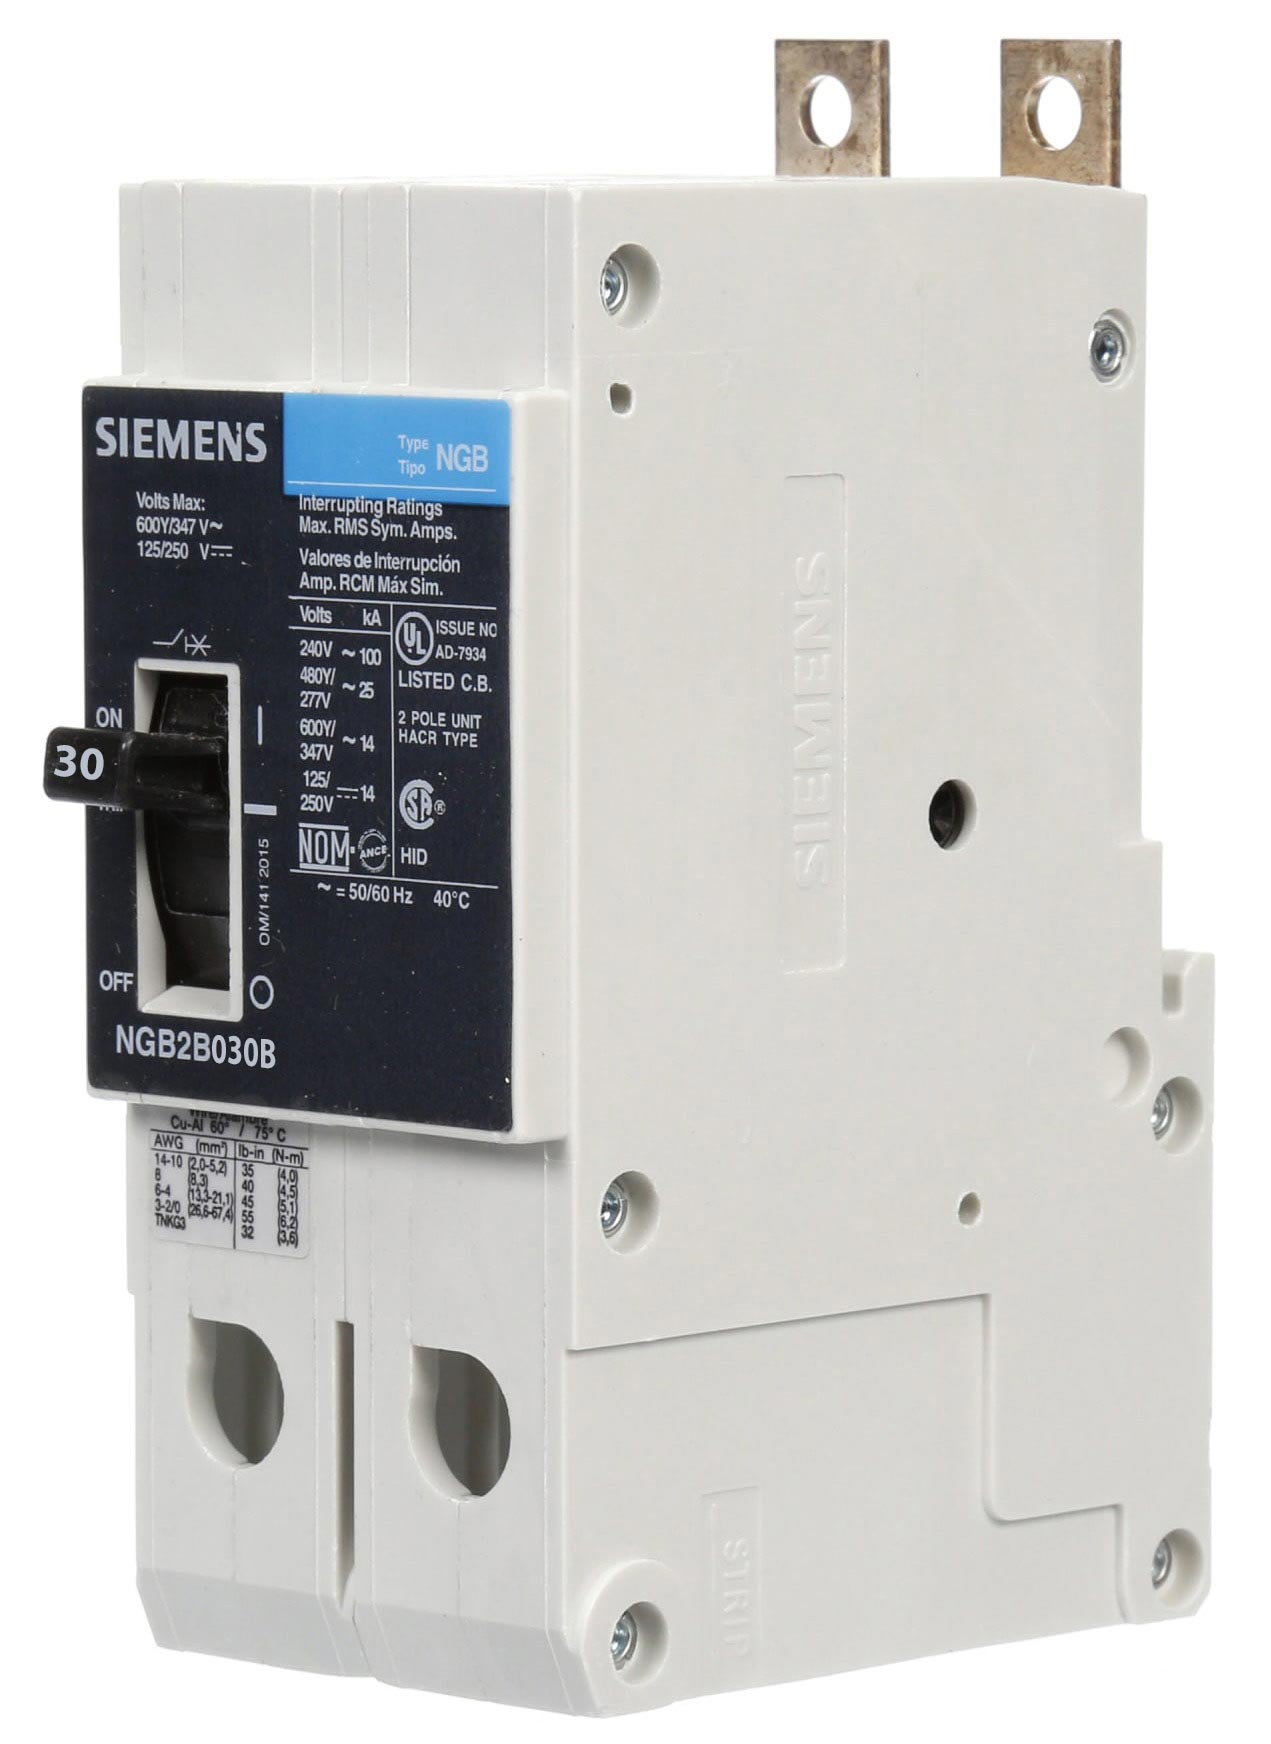 NGB2B030B - Siemens - Molded Case Circuit Breaker